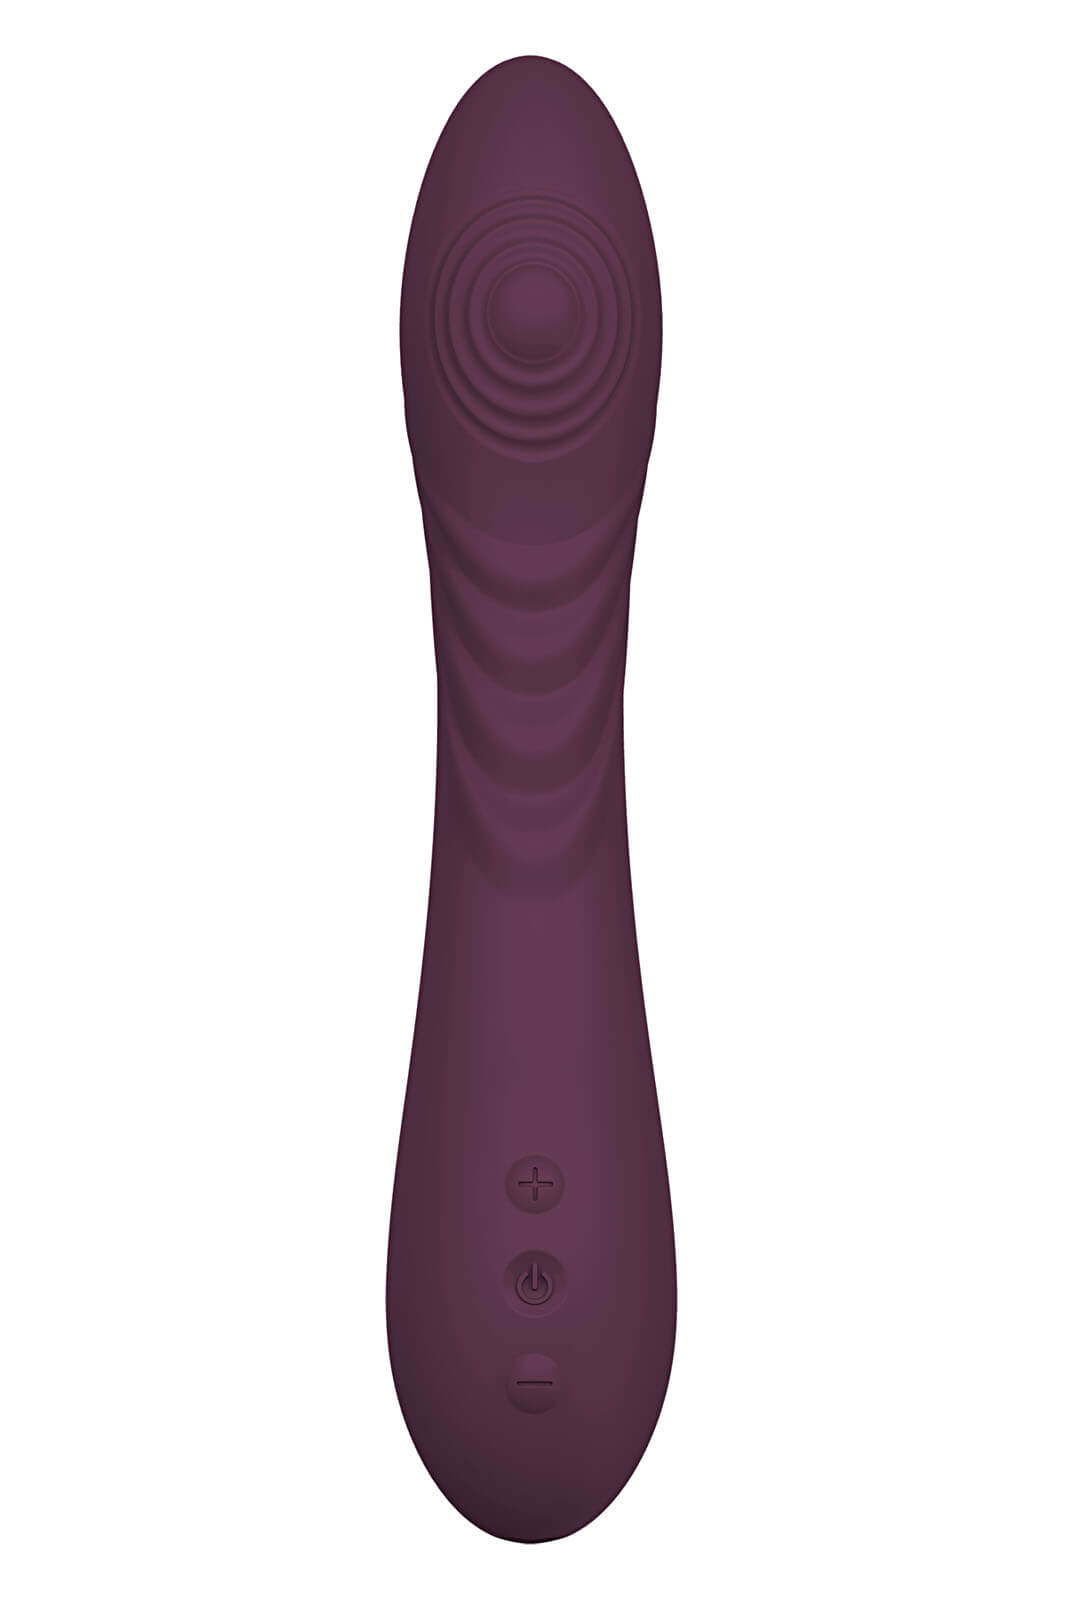 Dream Toys Essentials Tapping Power Vibe (Purple), pulzující vibrátor